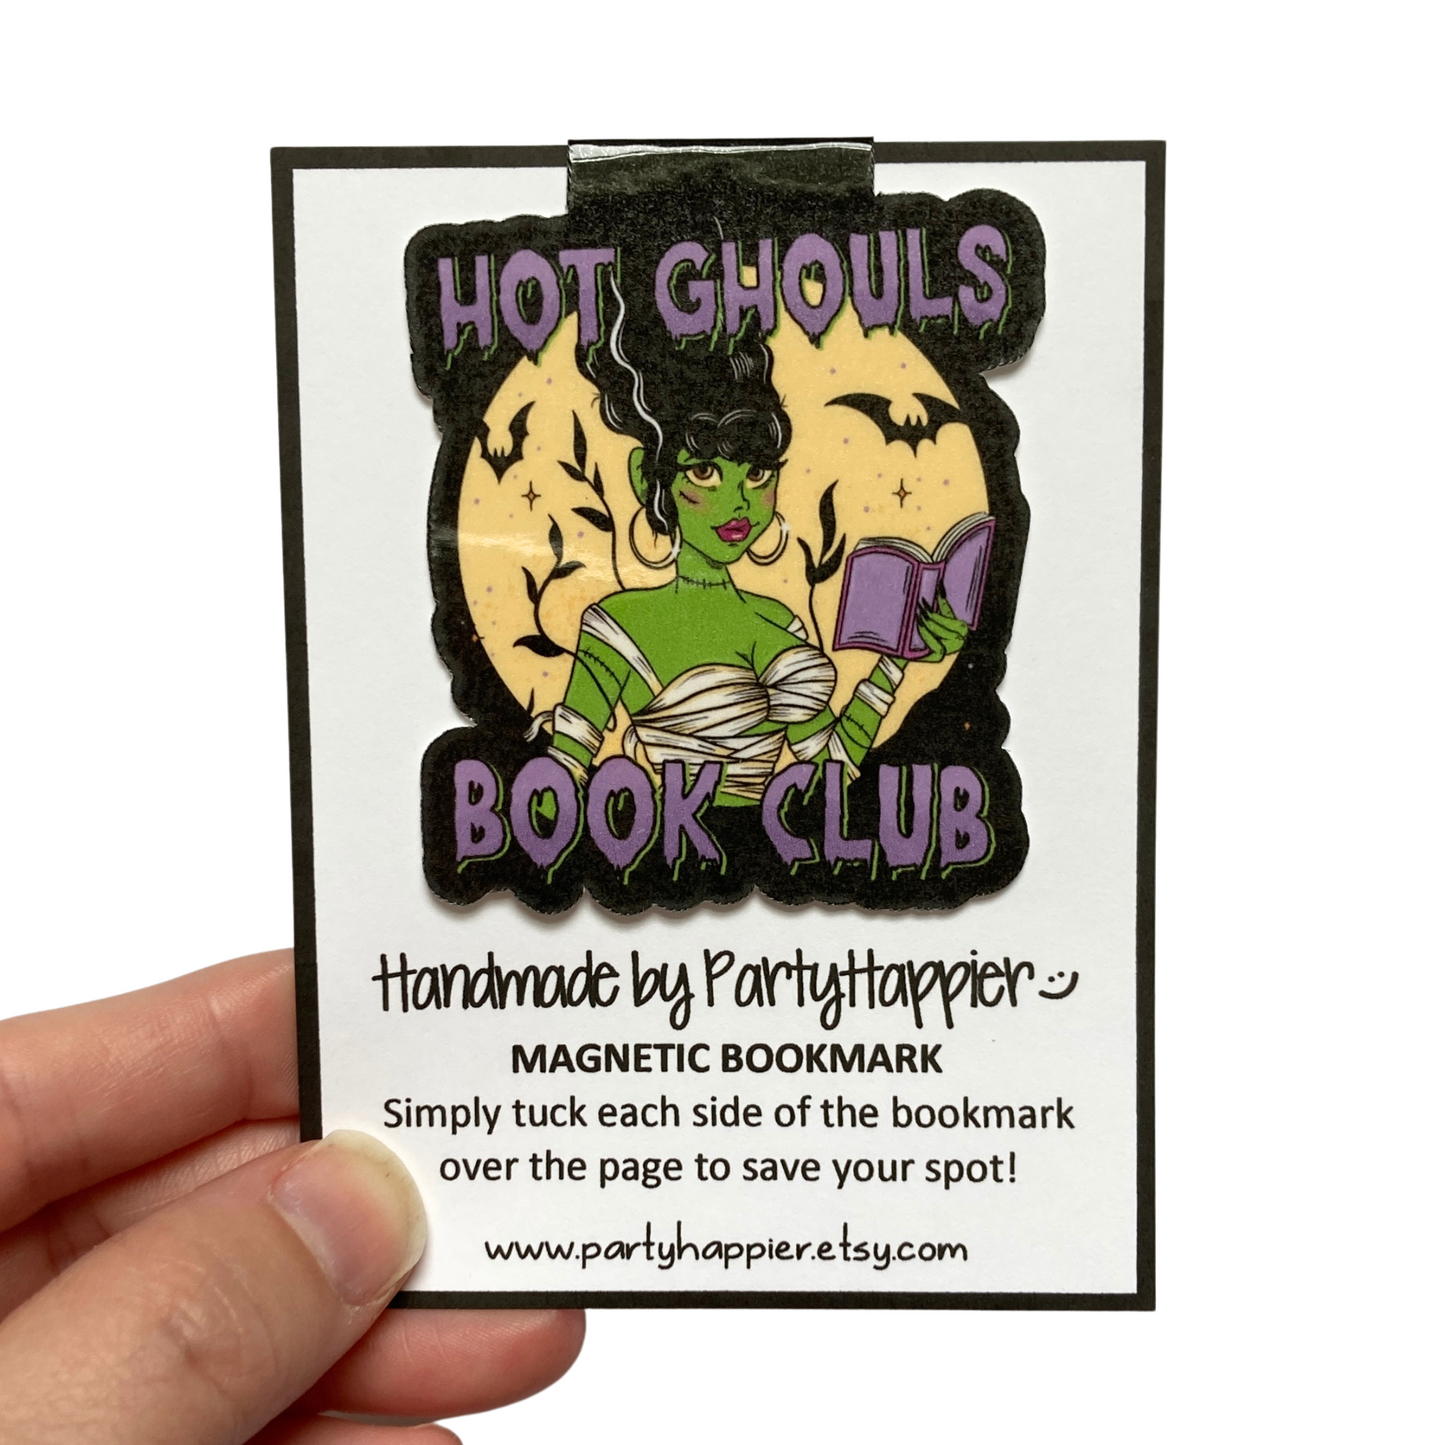 Hot Ghouls Book Club Bookmark